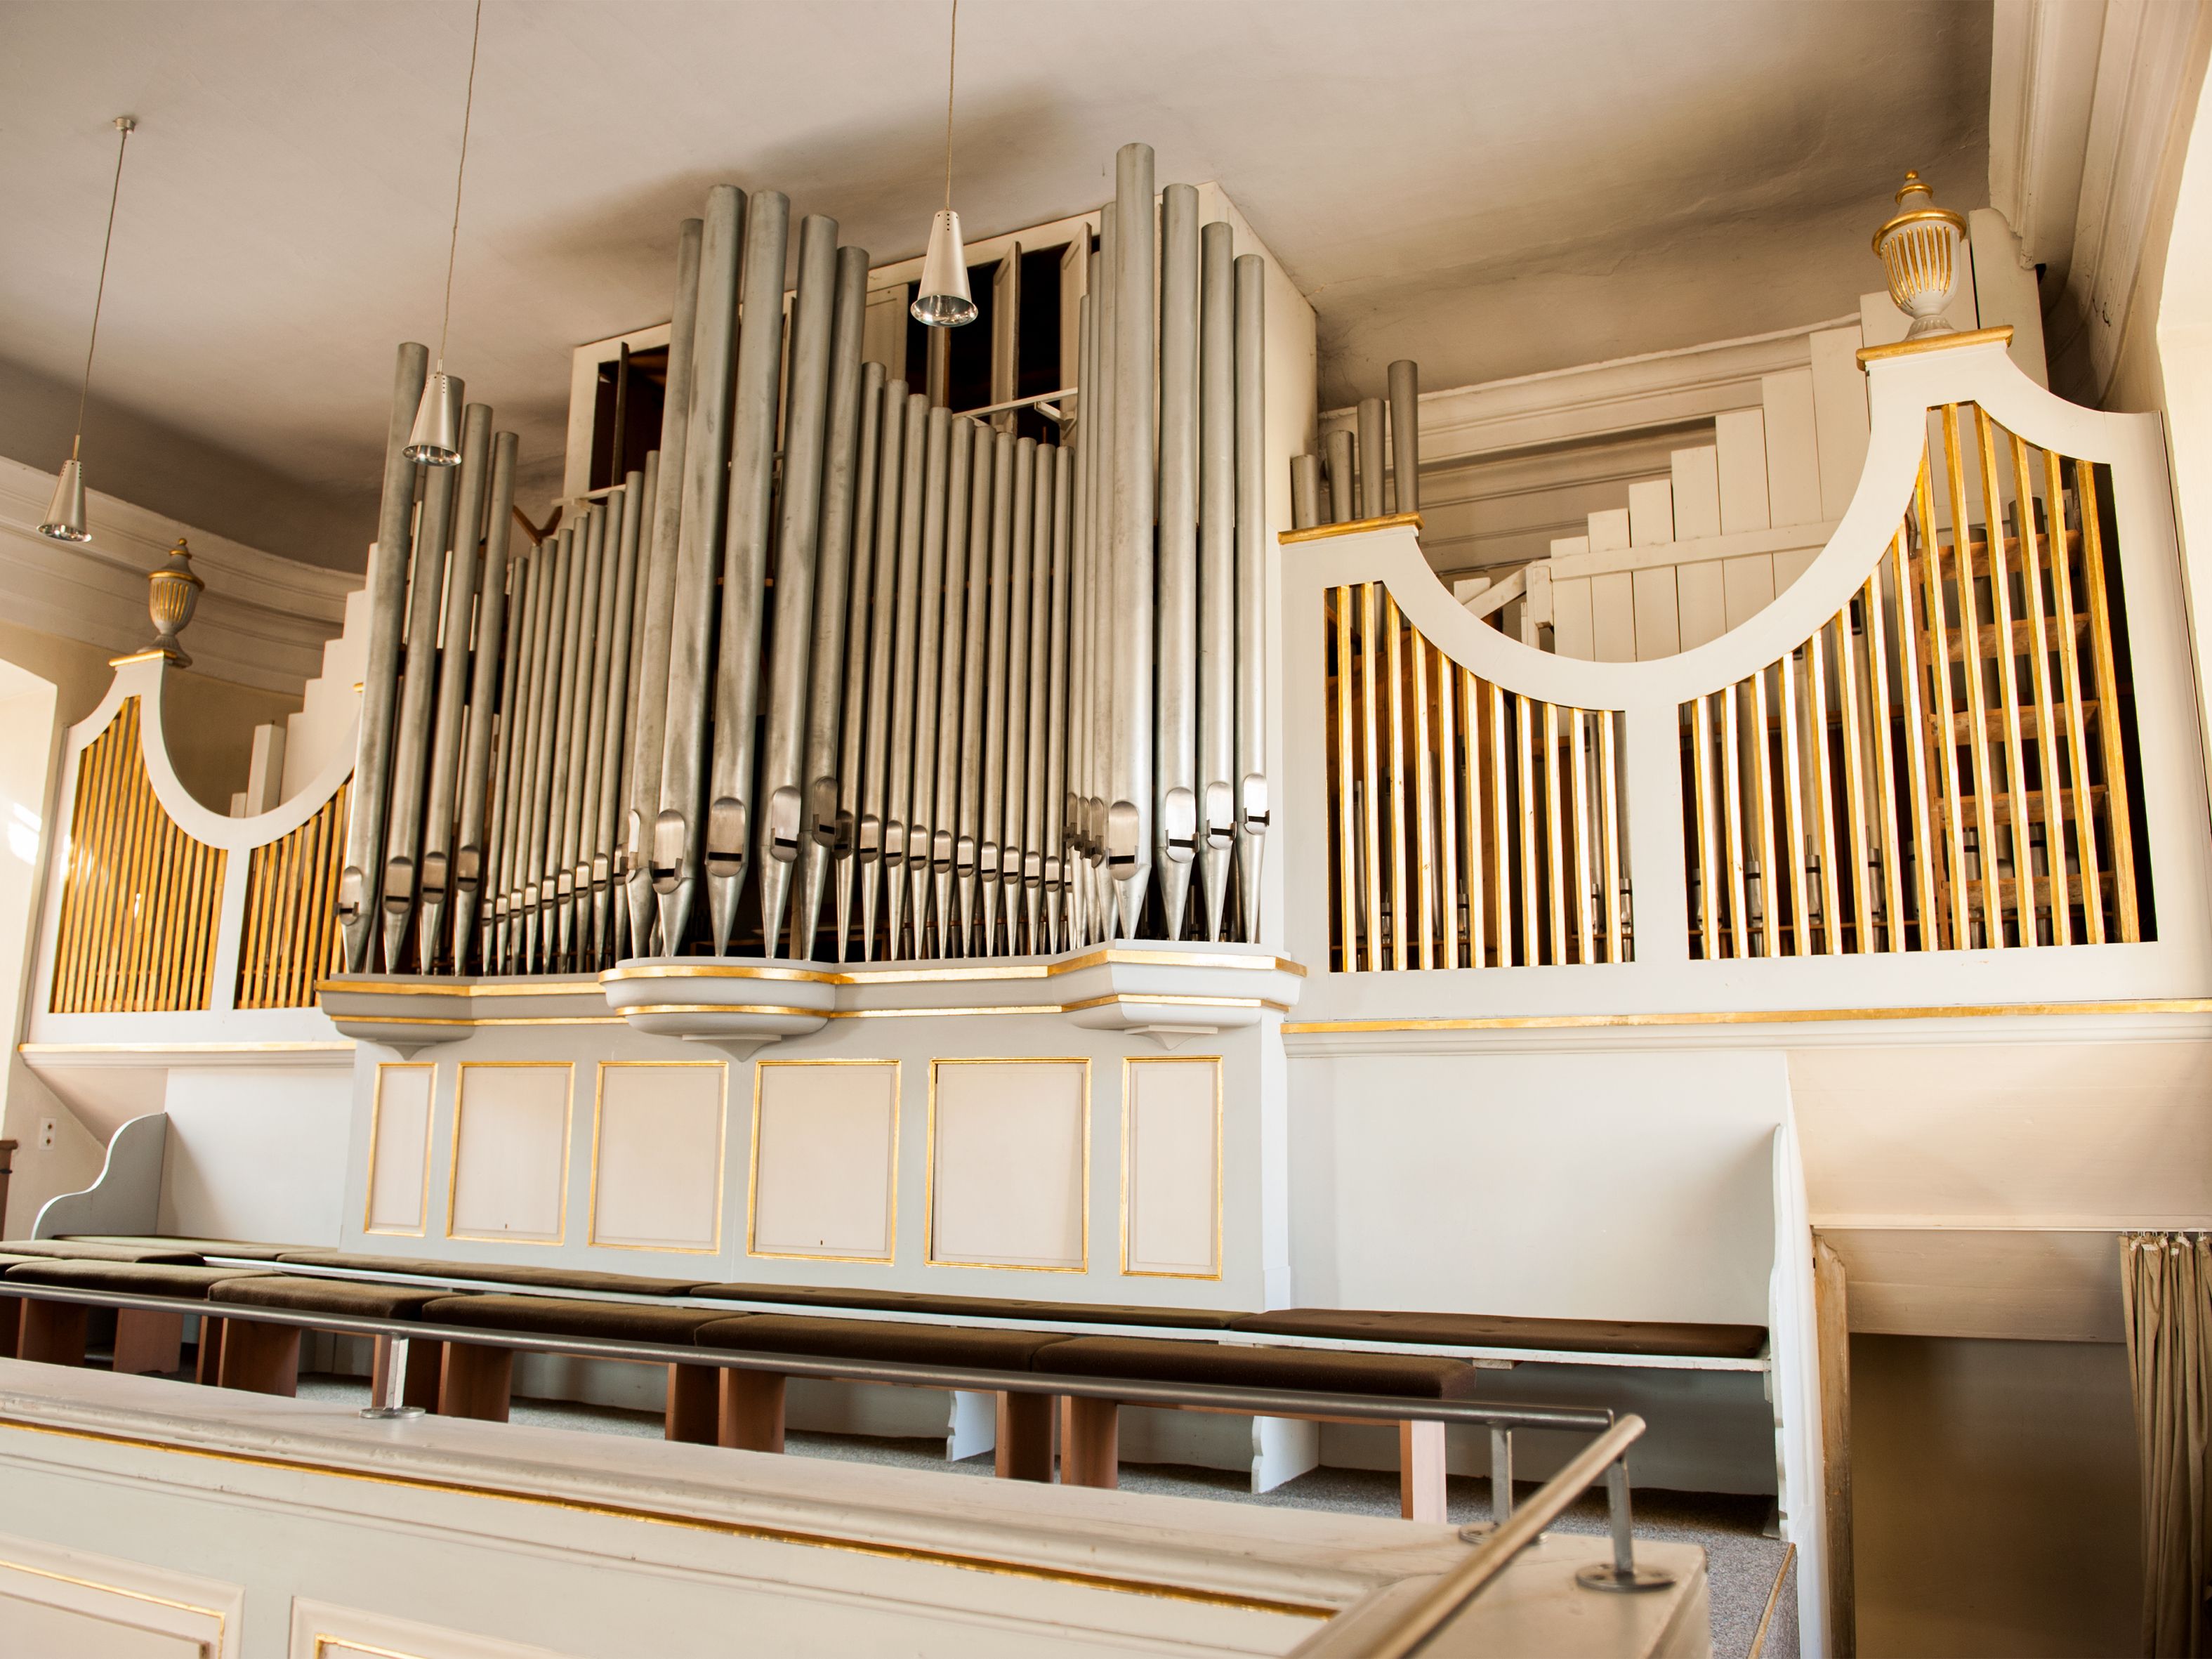  Orgel 